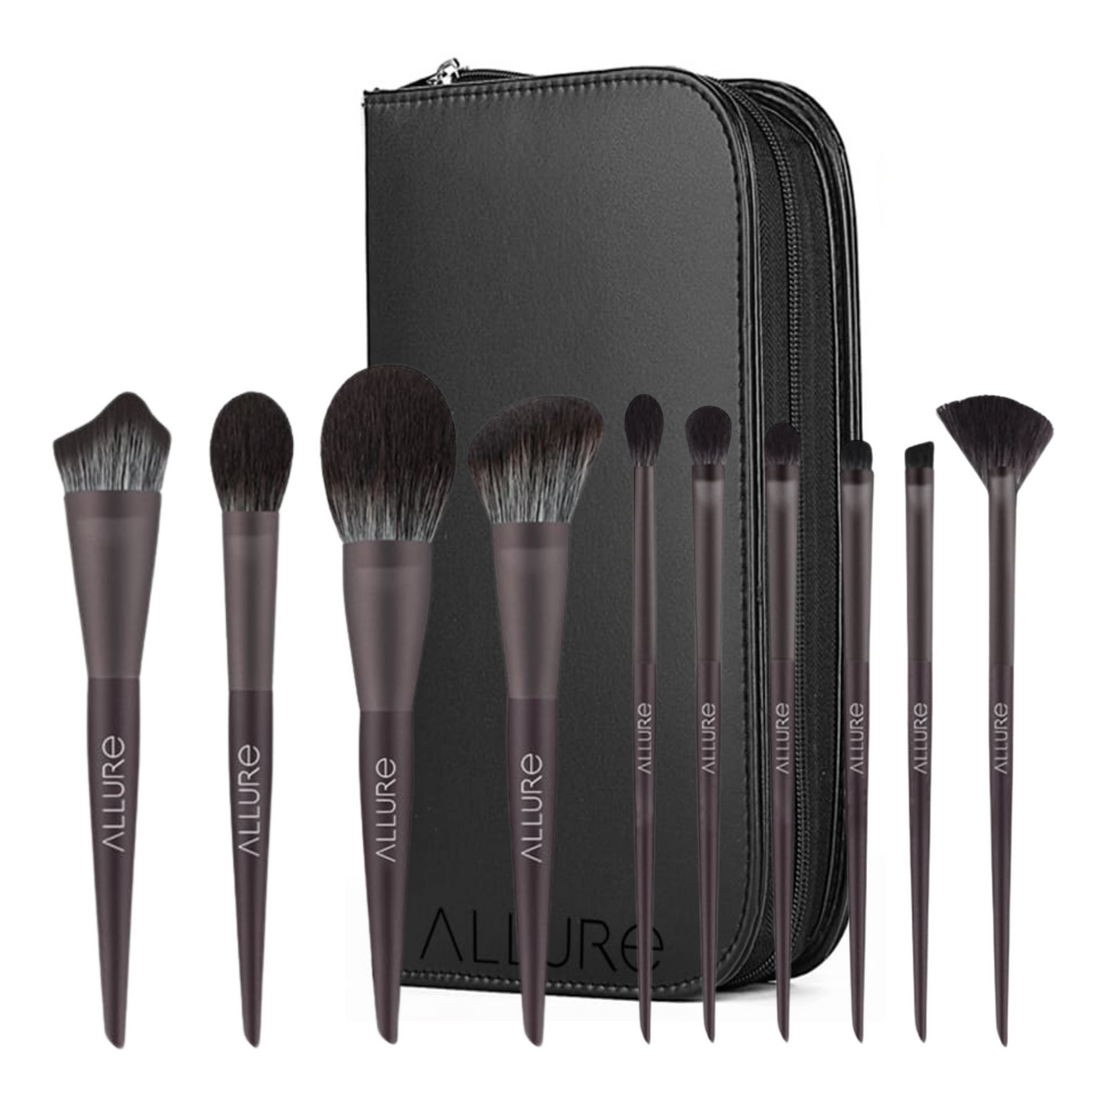 ALLURE Professional Makeup Brush Set with makeup brushes bag (Pack of 10)